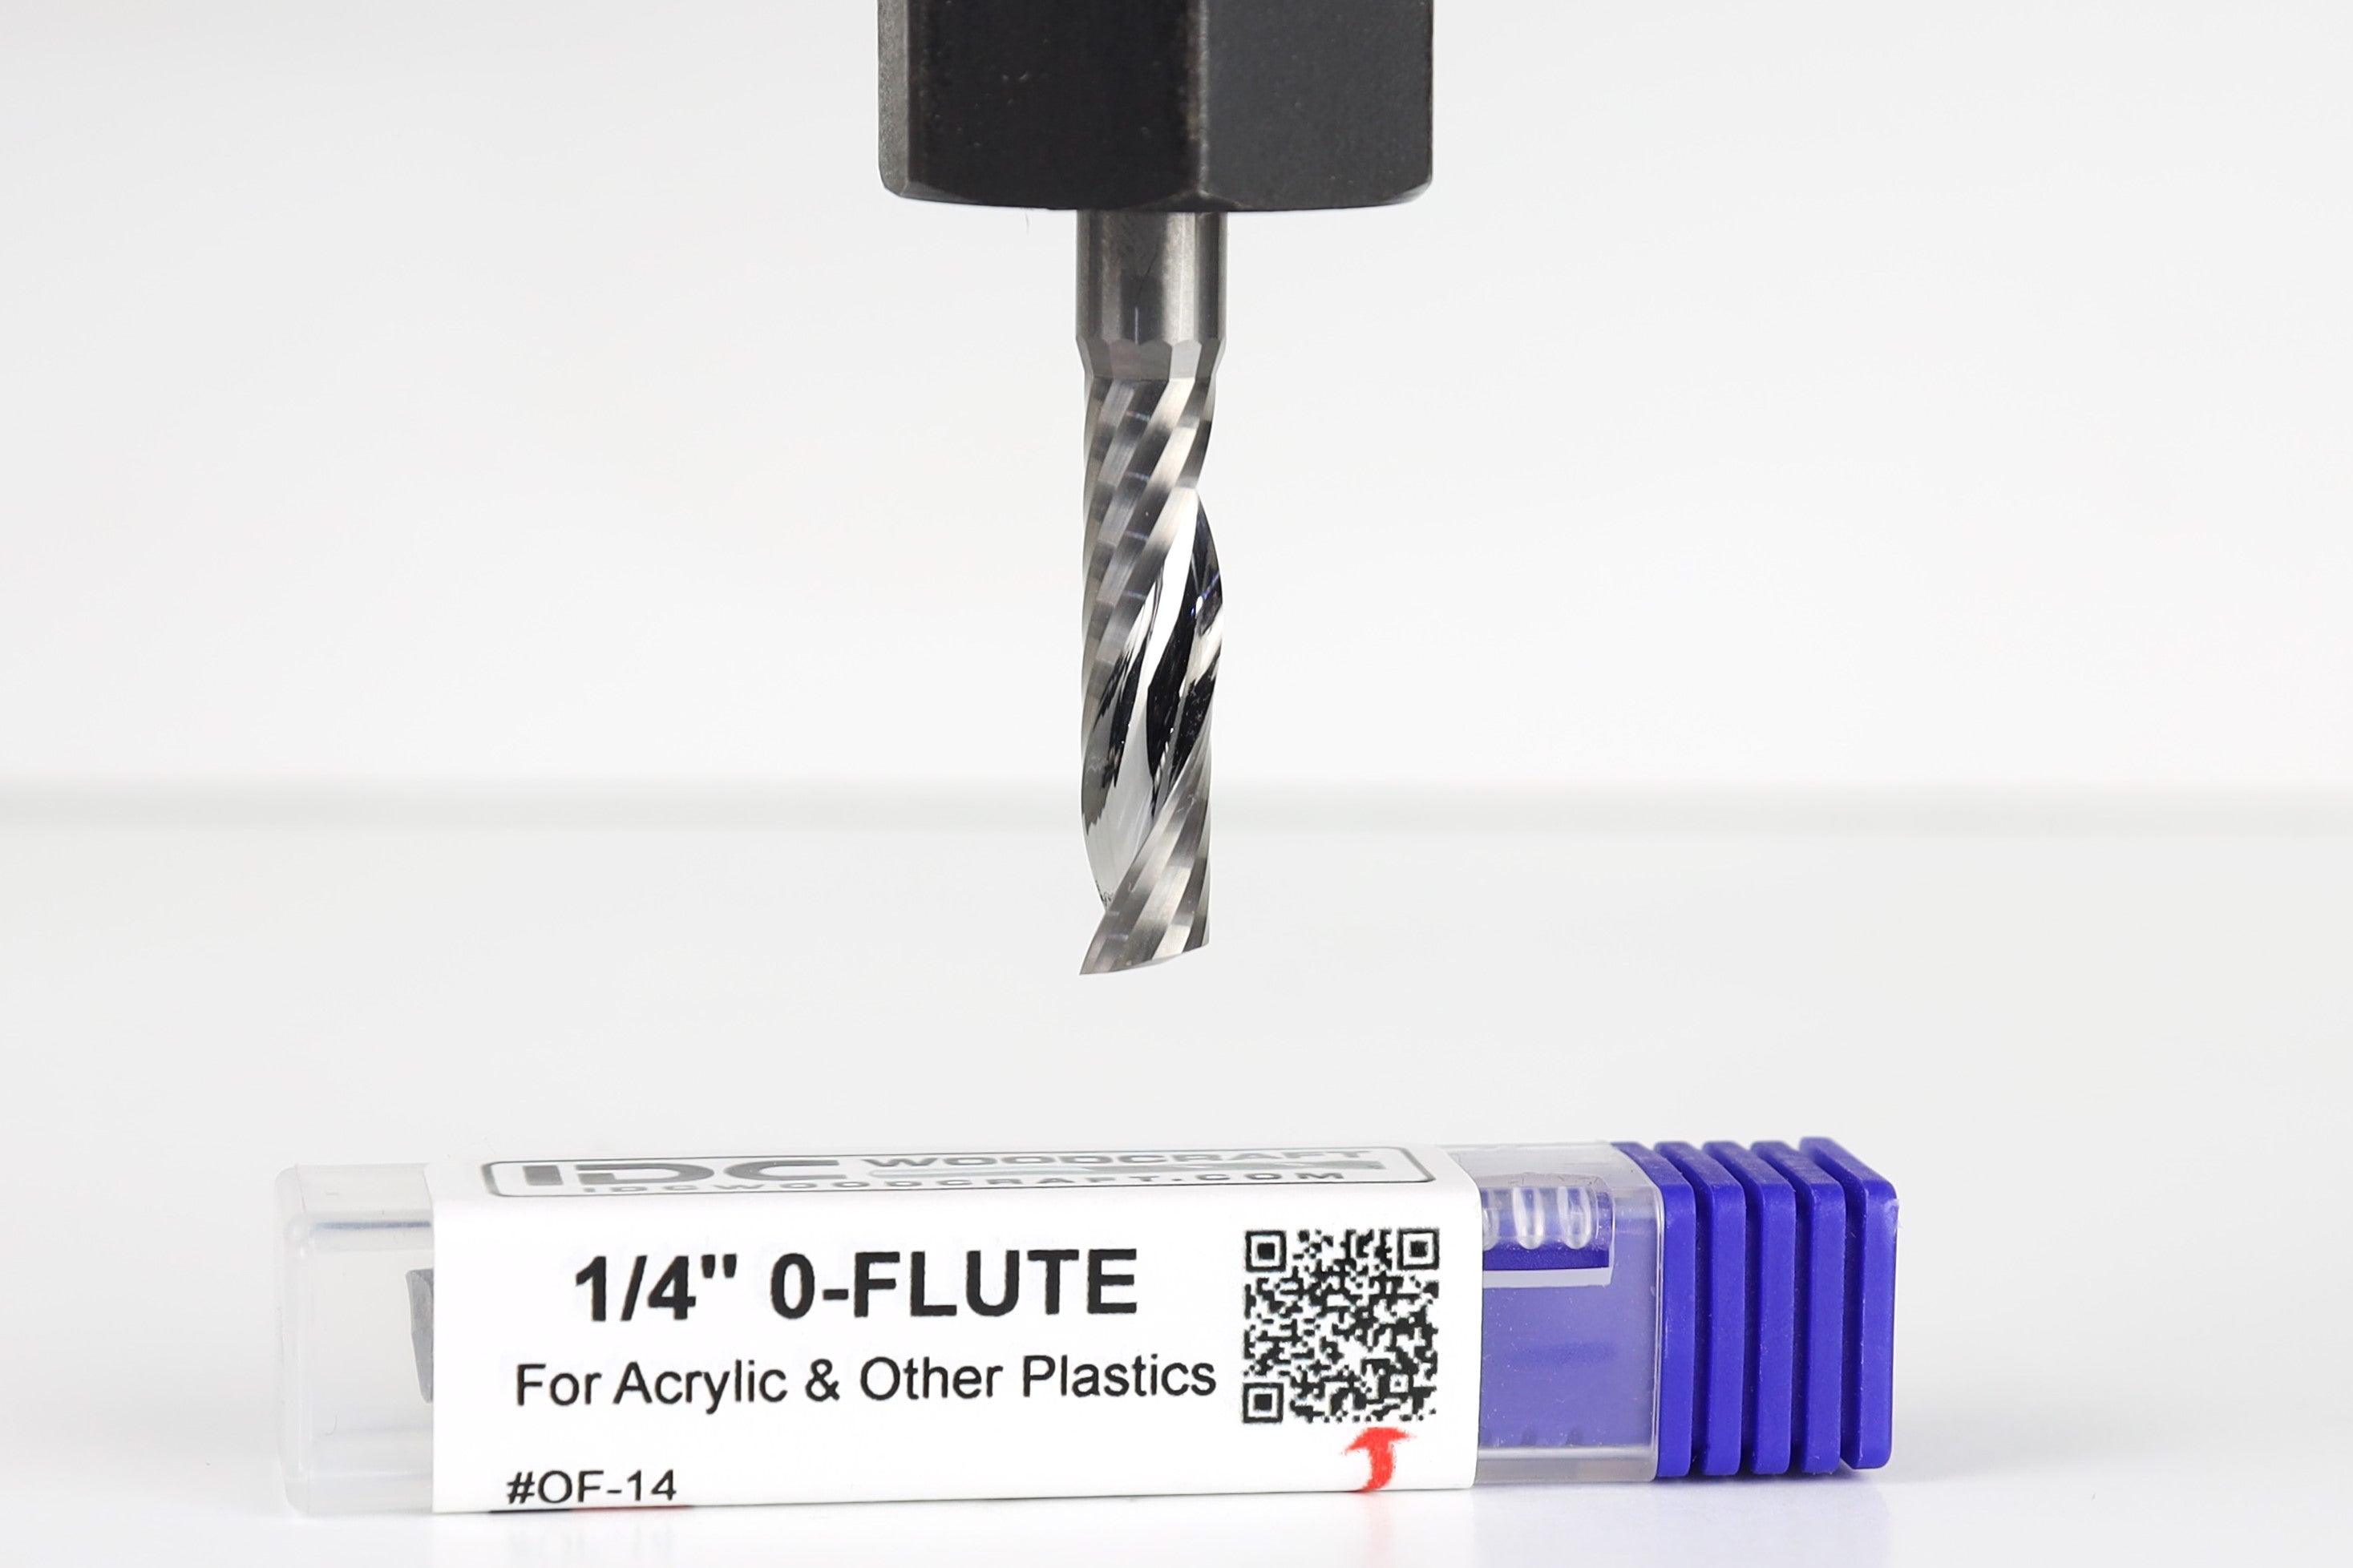 1/4" 0-Flute CNC Router Bit For Acrylic, 1/4" Shank